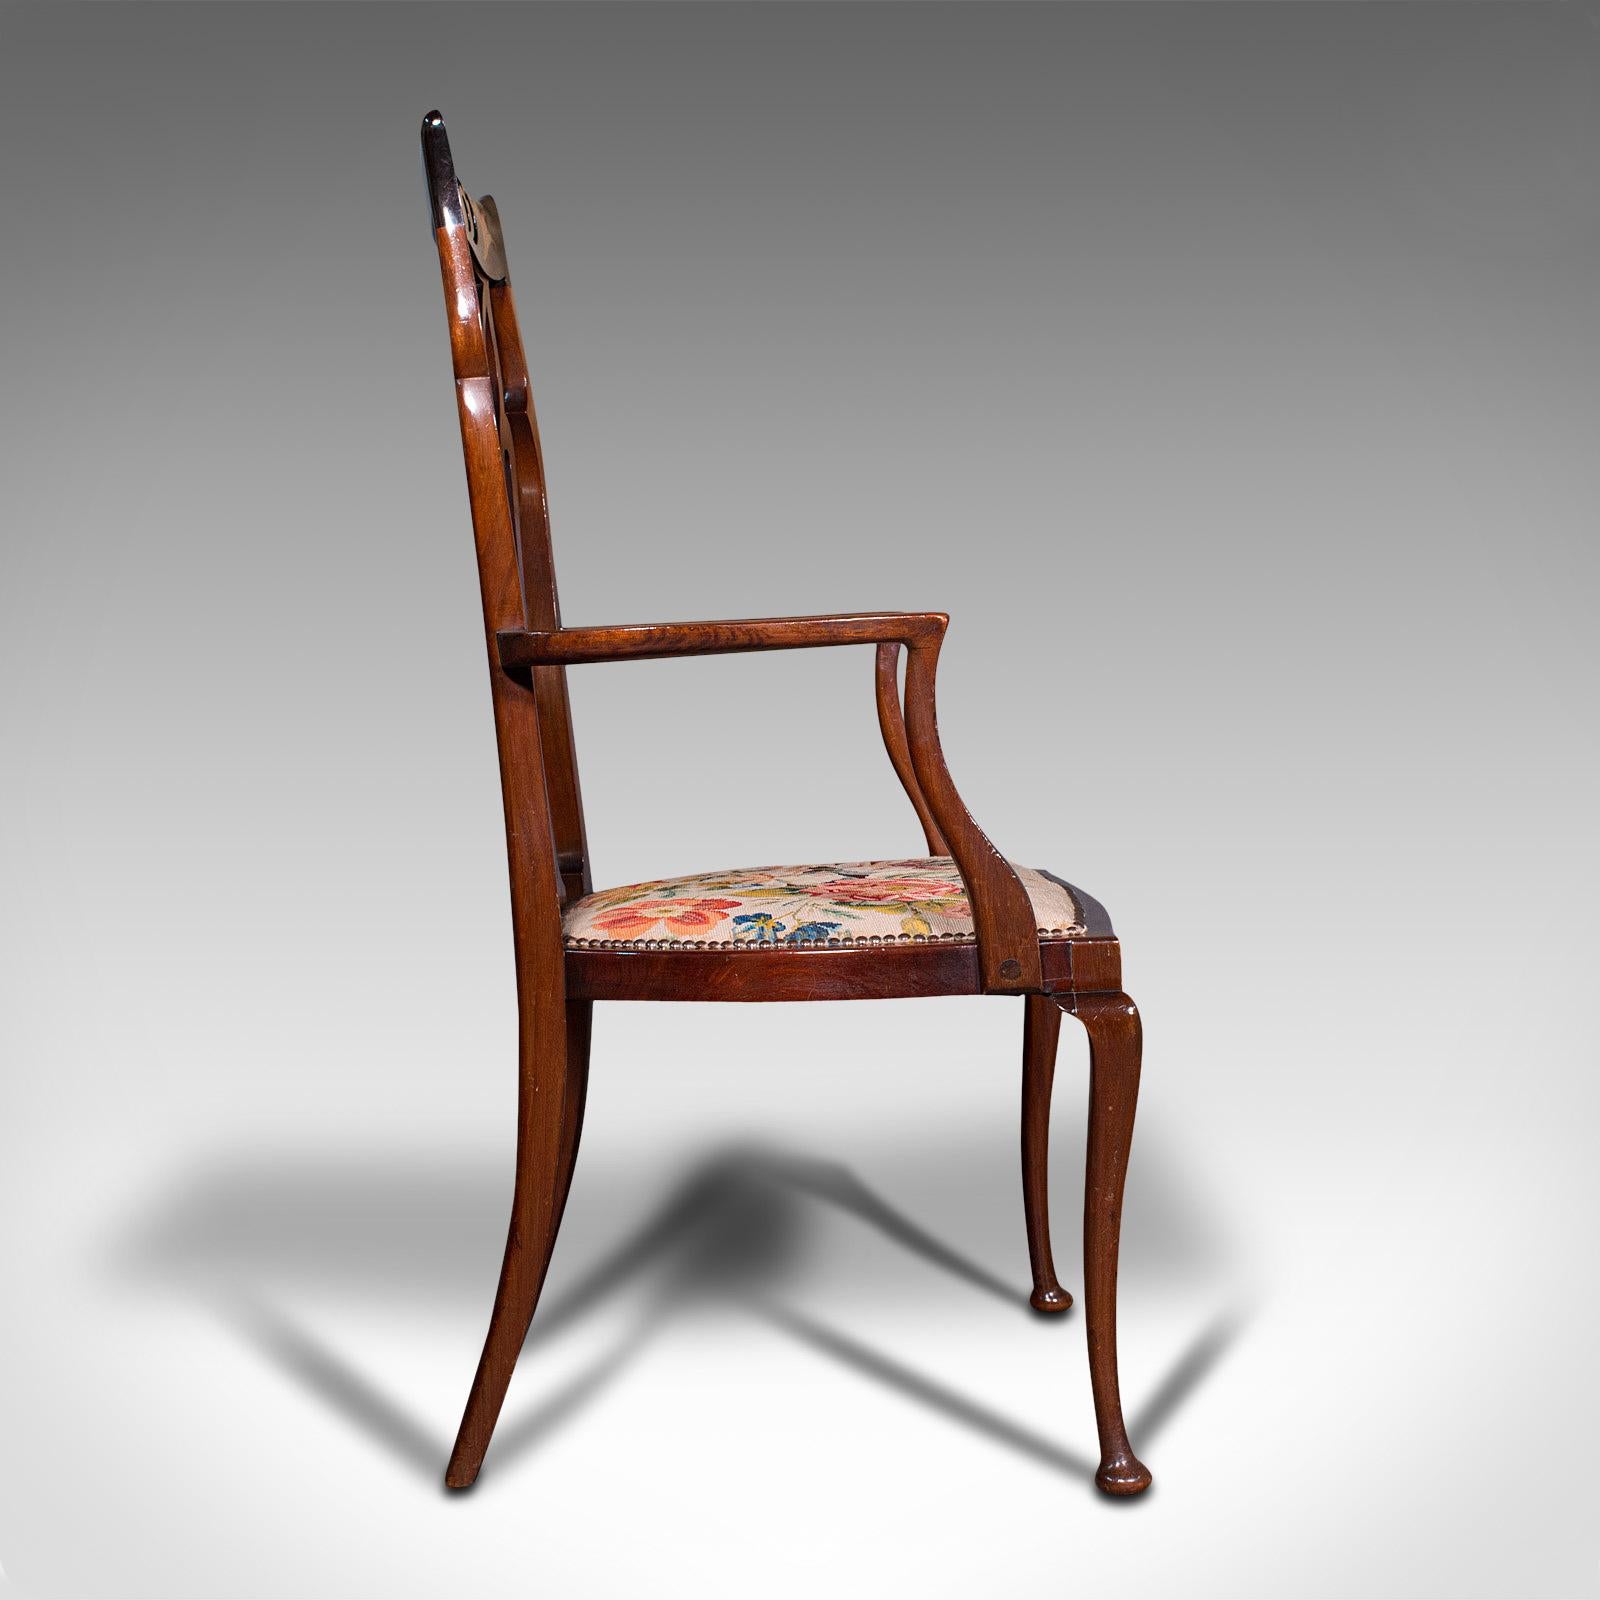 British Antique Elbow Chair, English, Occasional, Art Nouveau, Libertyesque, Victorian